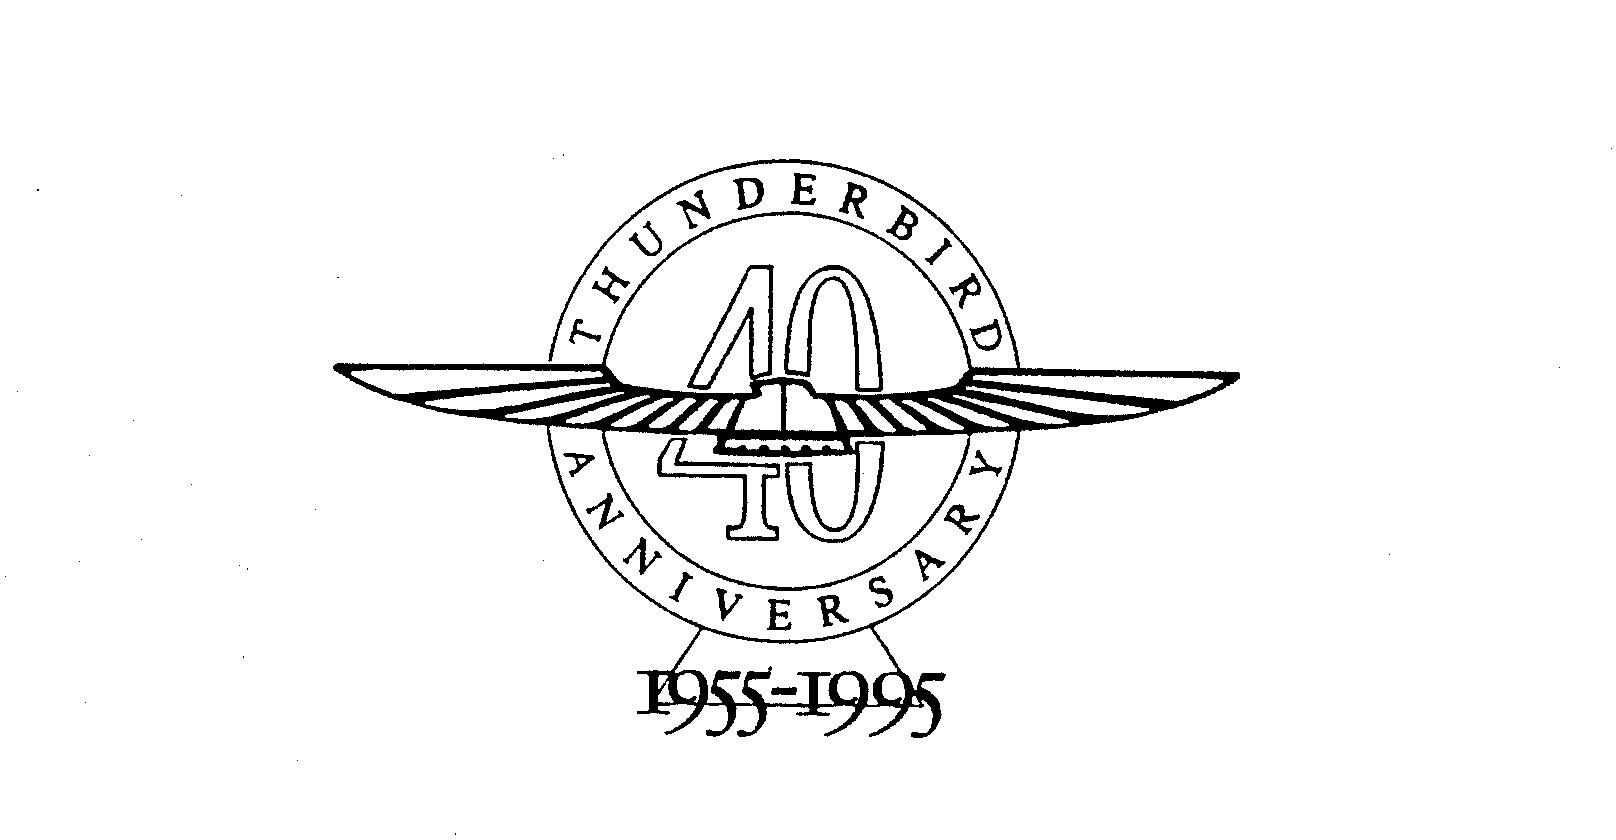  THUNDERBIRD ANNIVERSARY 40 1955-1995